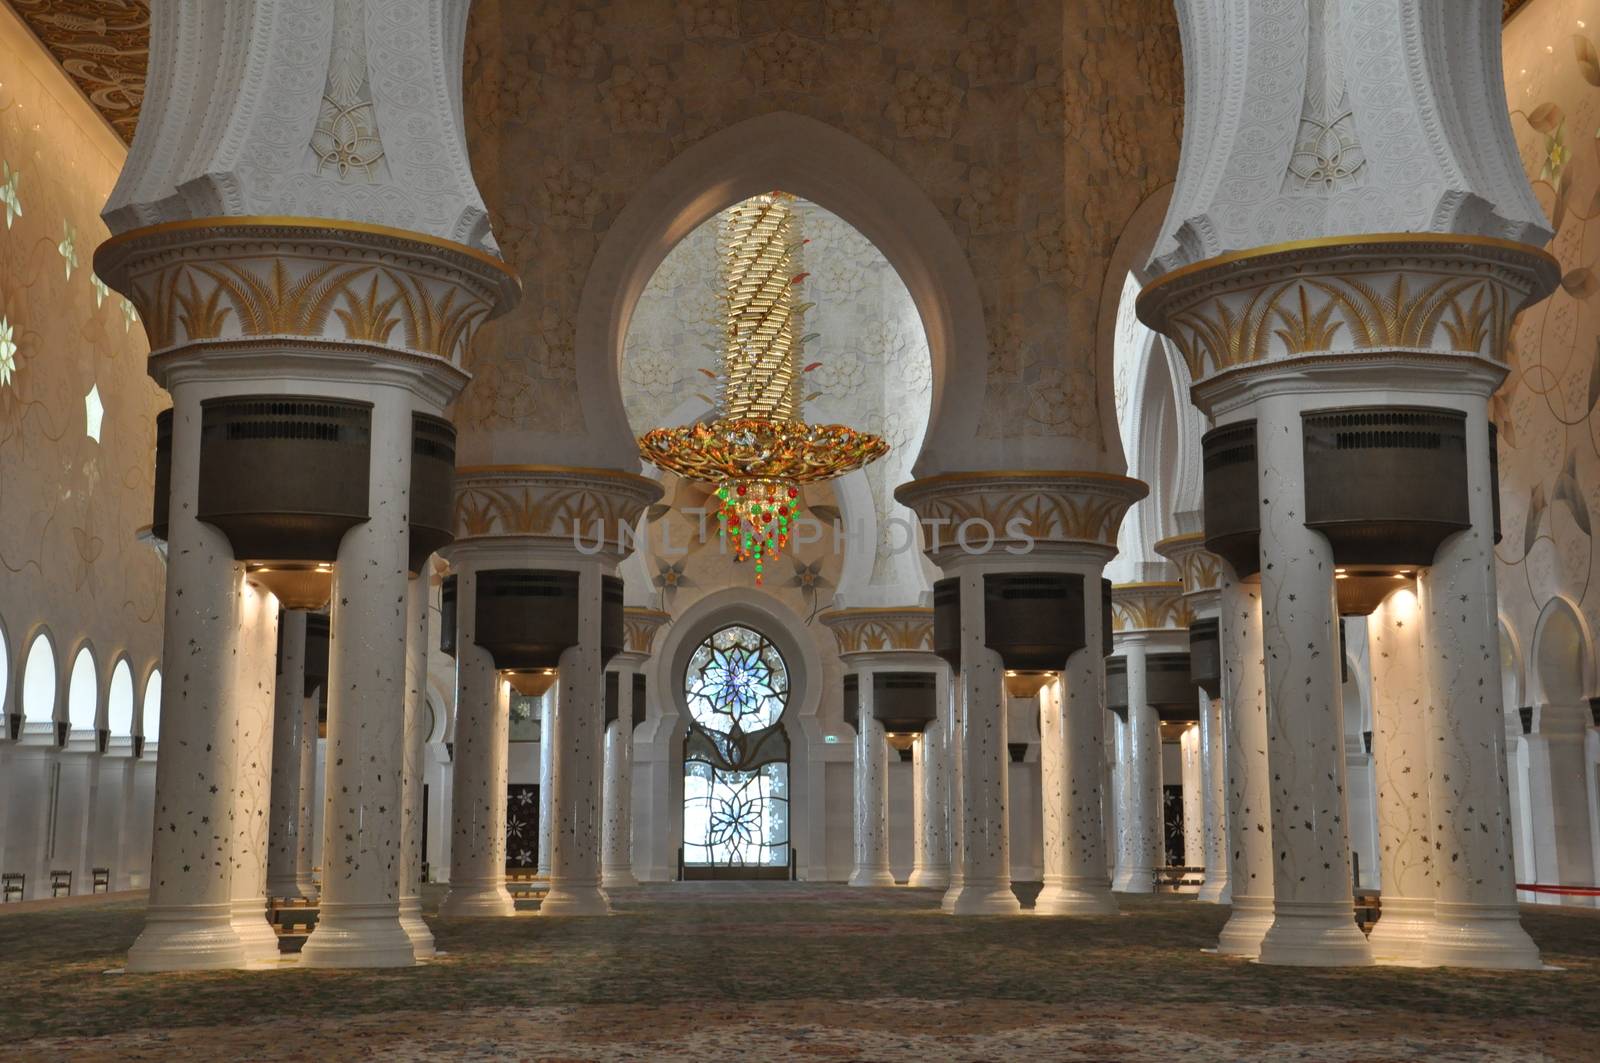 Magnificent interior of Sheikh Zayed Grand Mosque in Abu Dhabi, UAE by sainaniritu